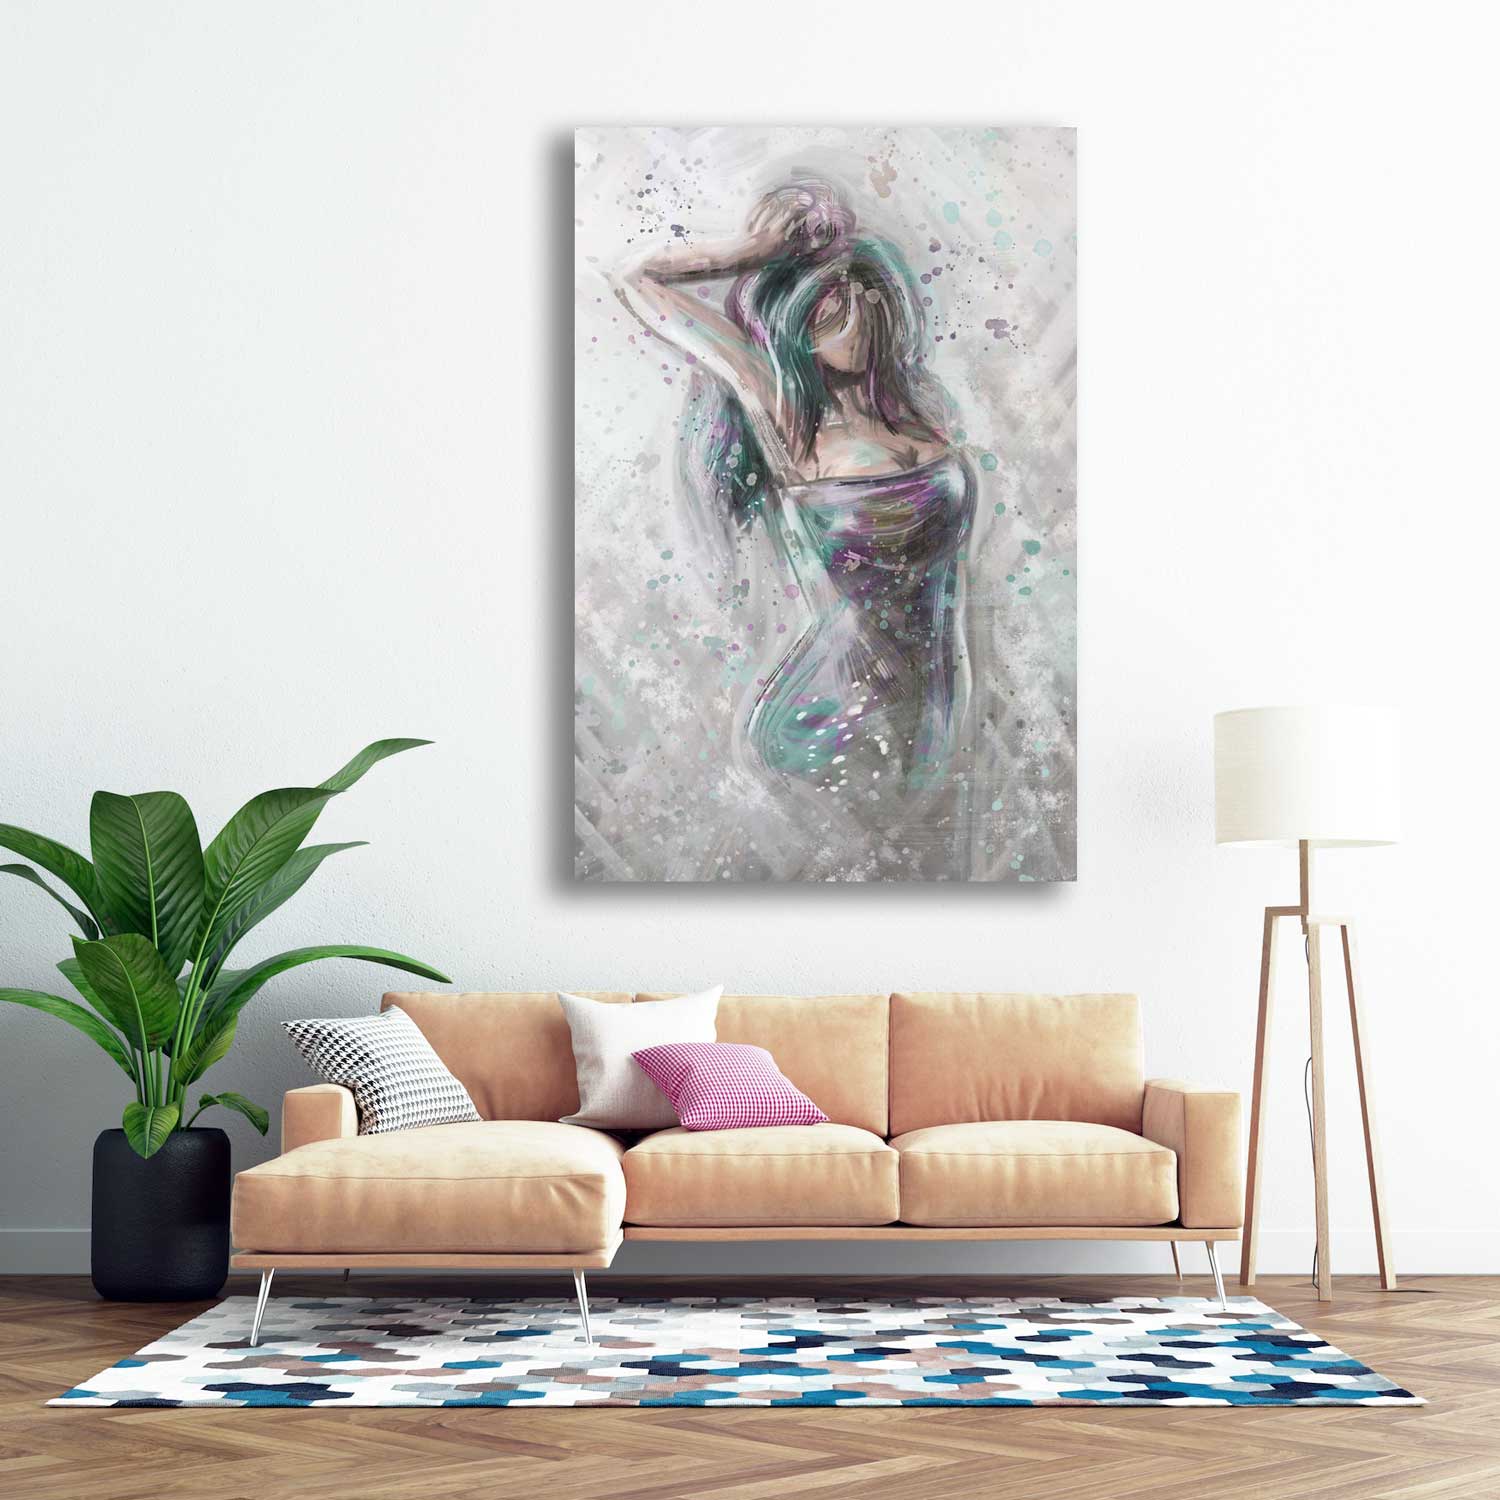 Kleurig abstract kunstwerk - vrouw met jurk